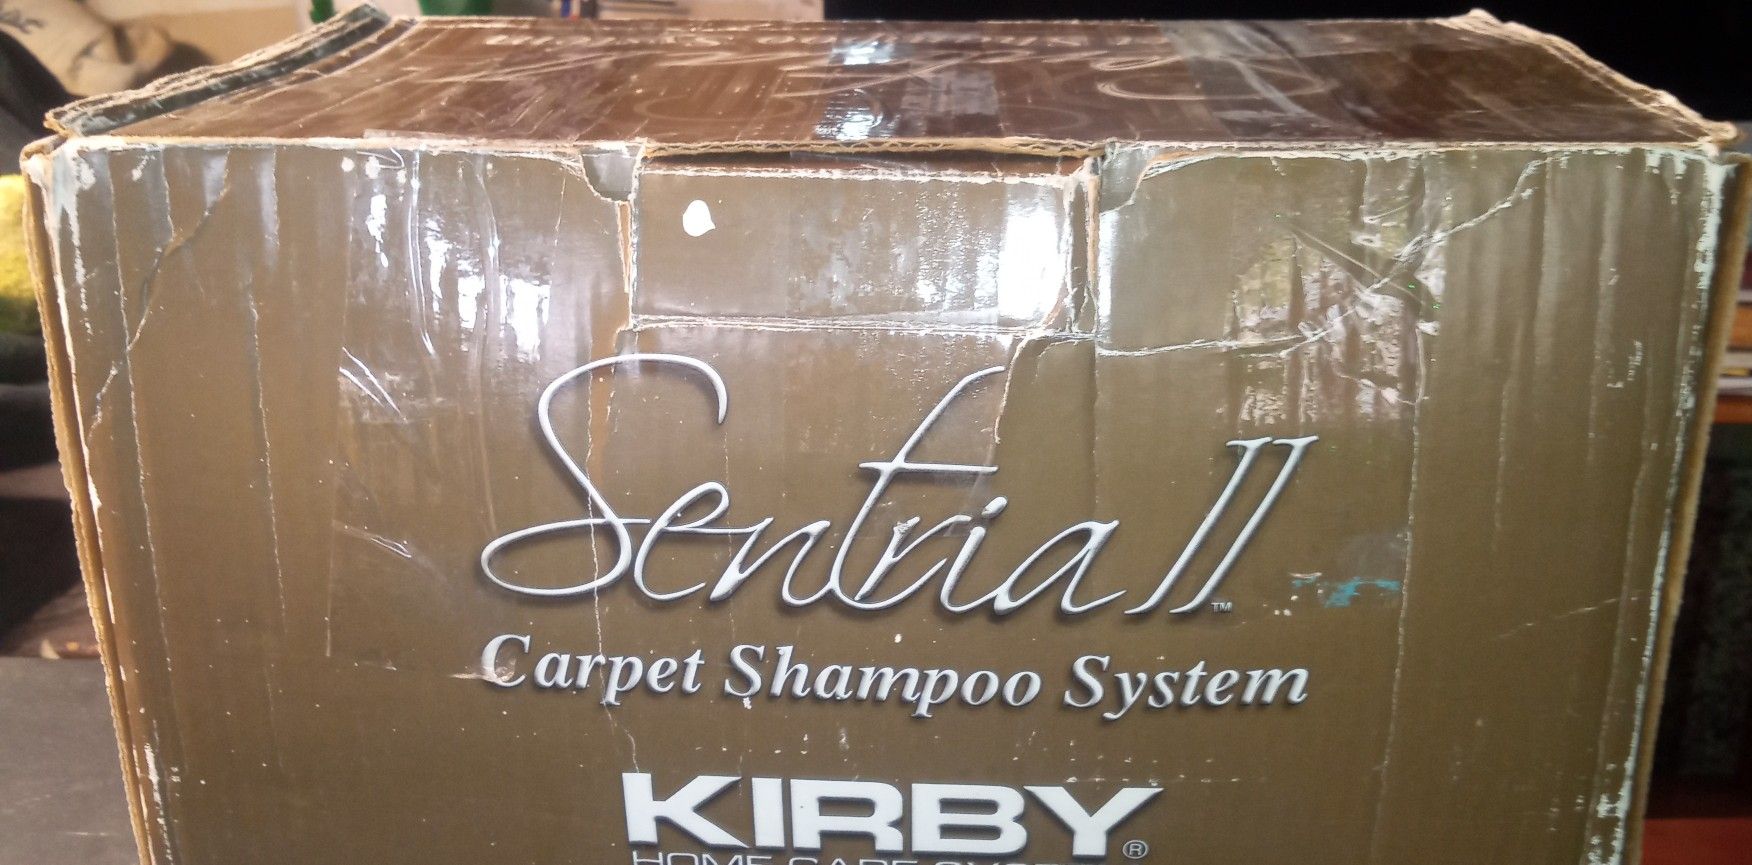 Kirby Shampoo System Home Care Kit